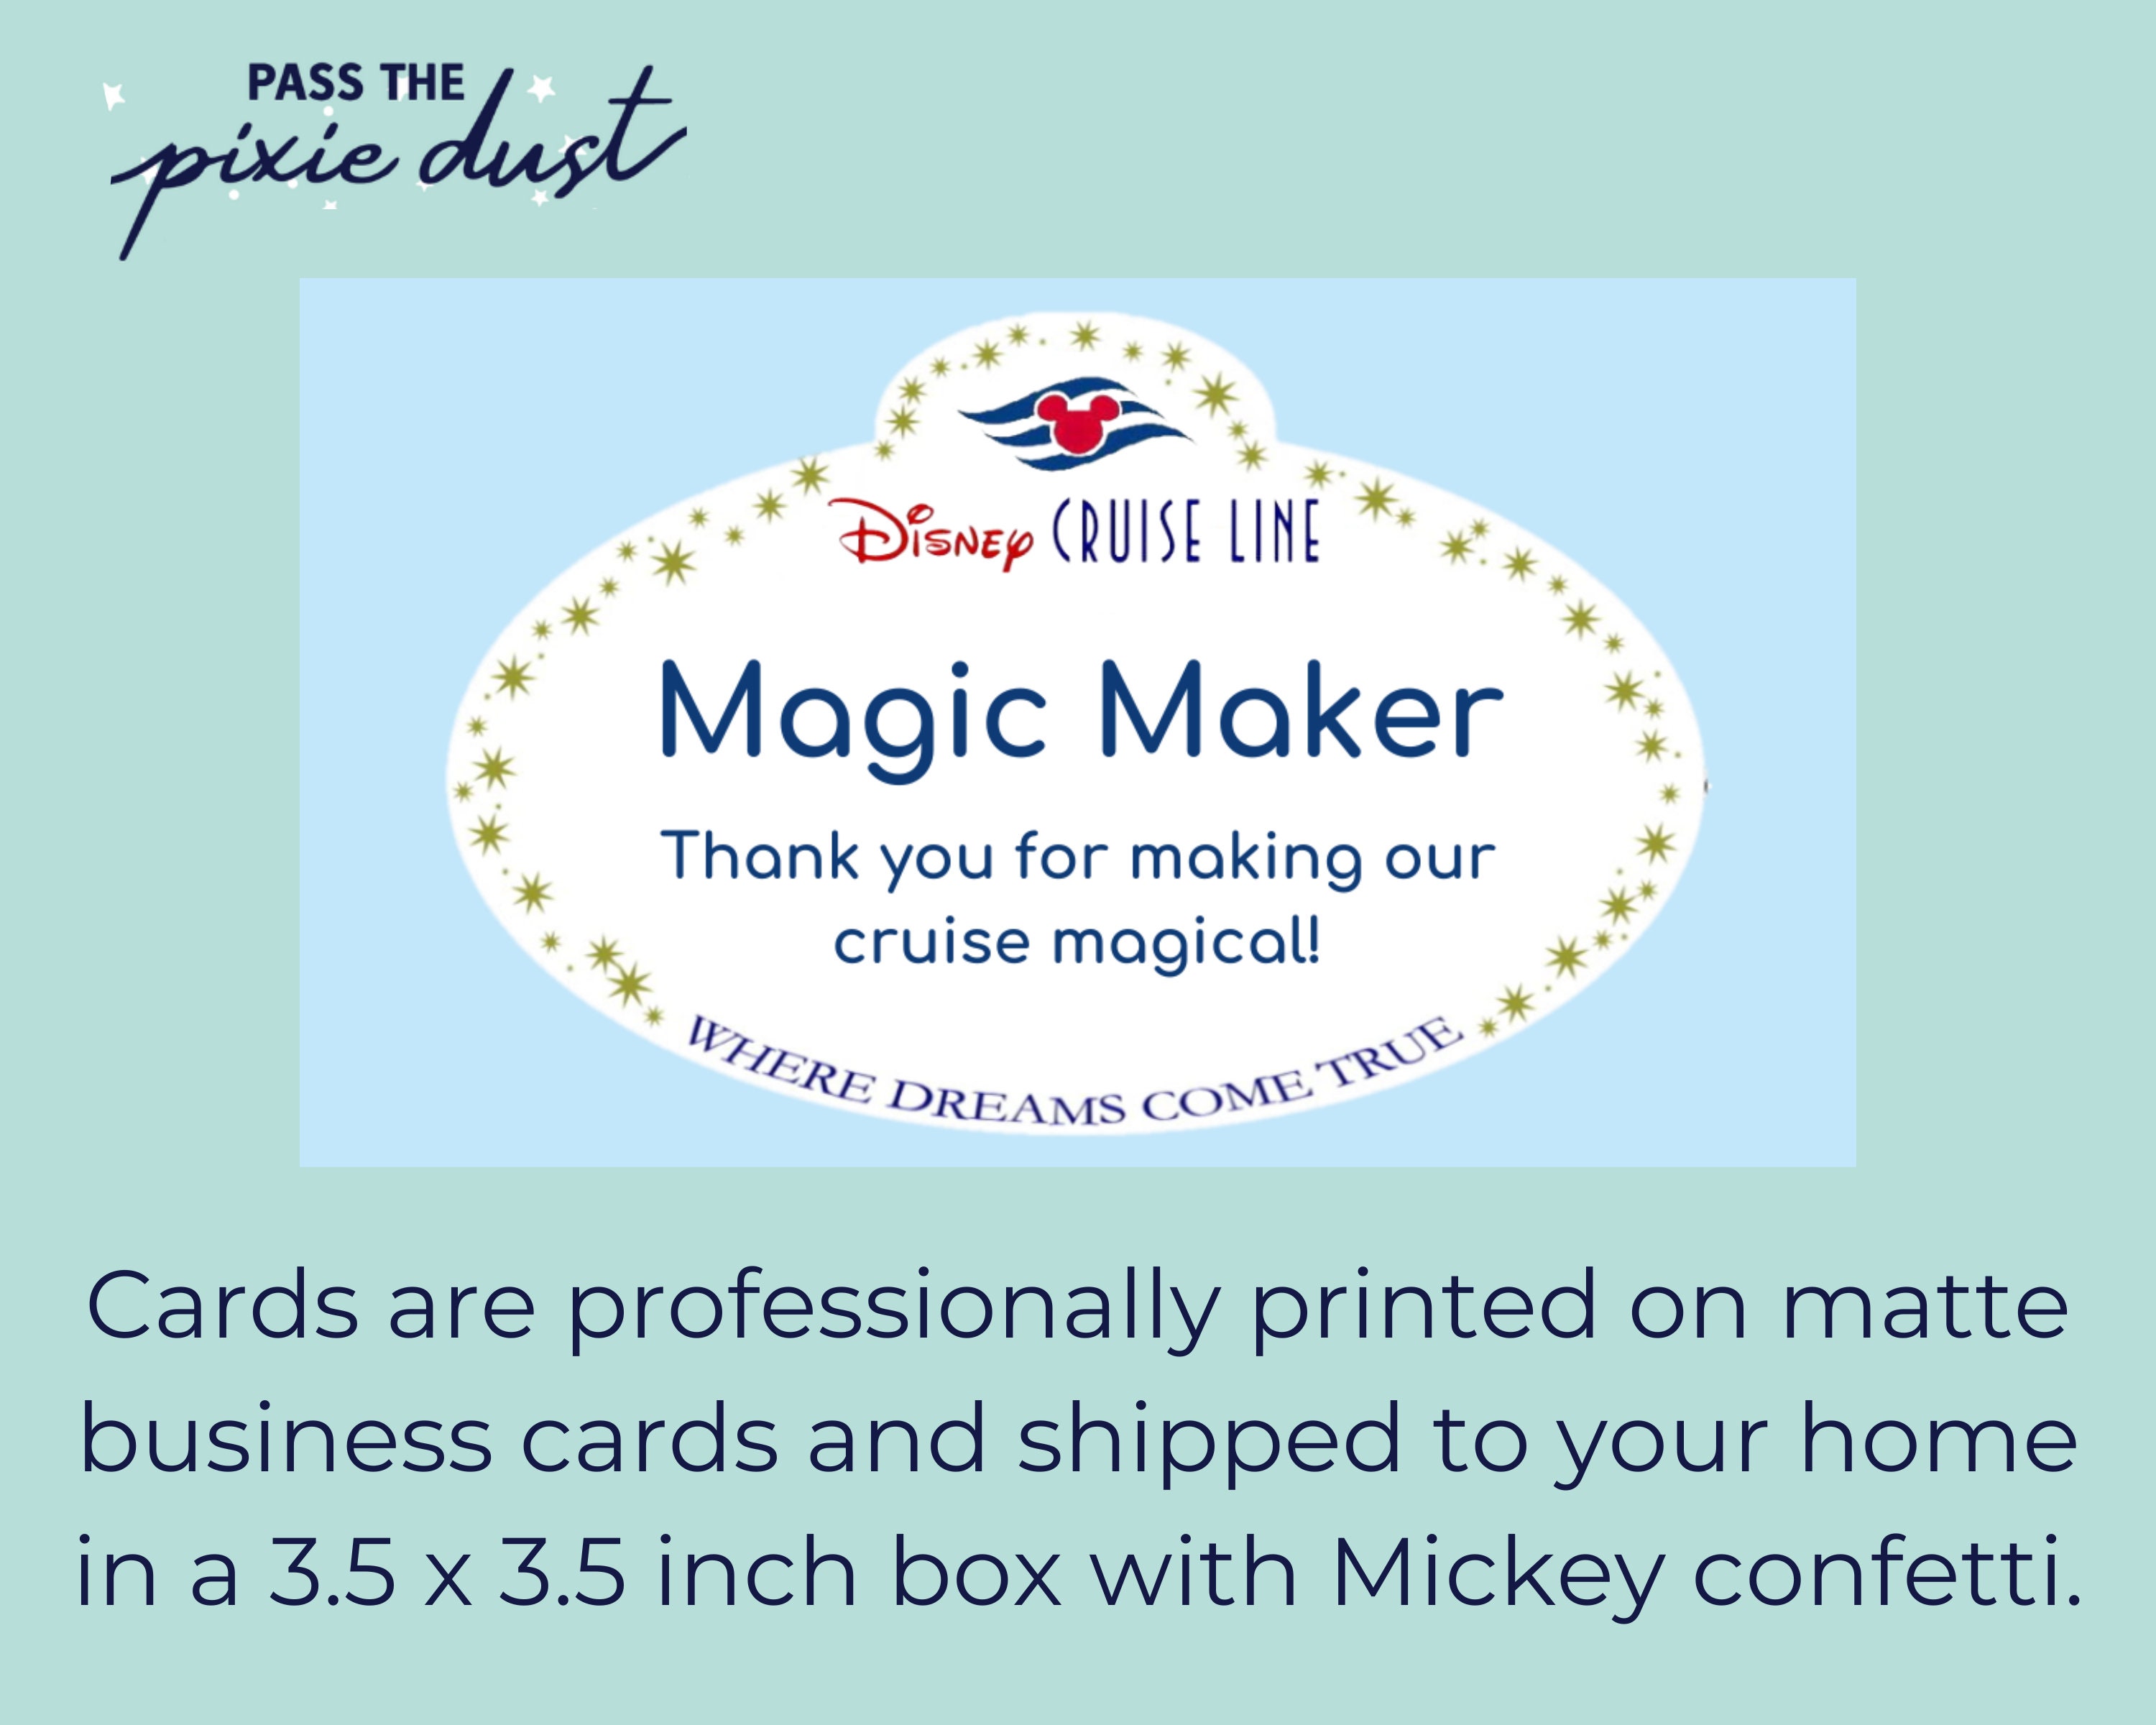 Are You a Magic Maker?